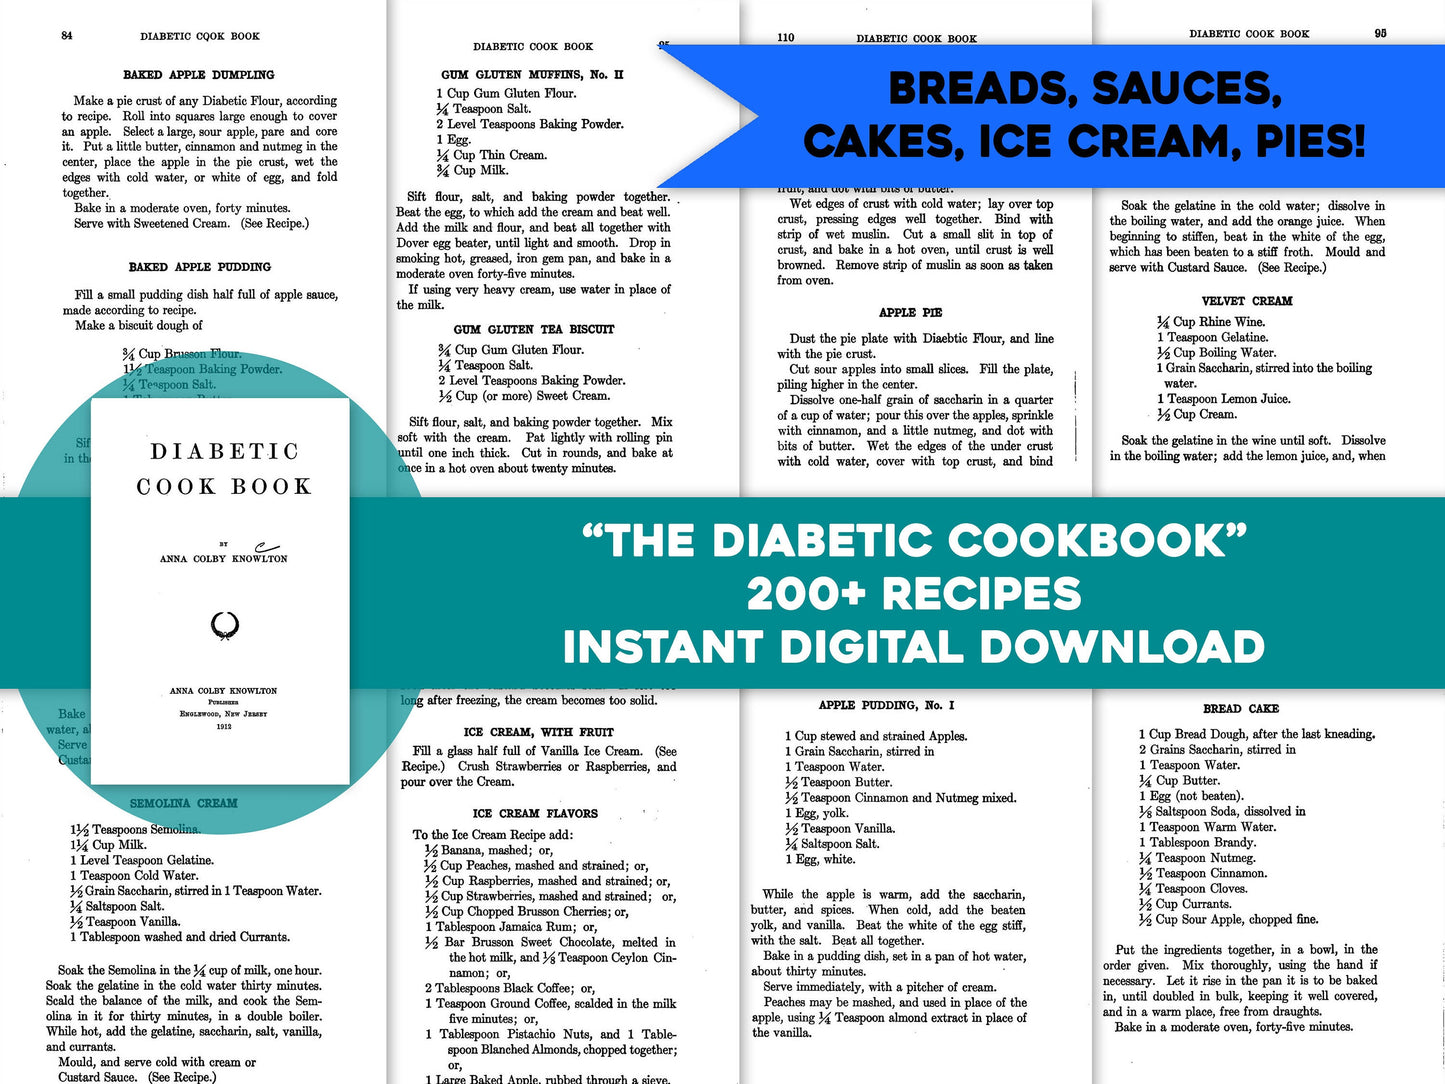 The Diabetic Cookbook [200+ Recipes]